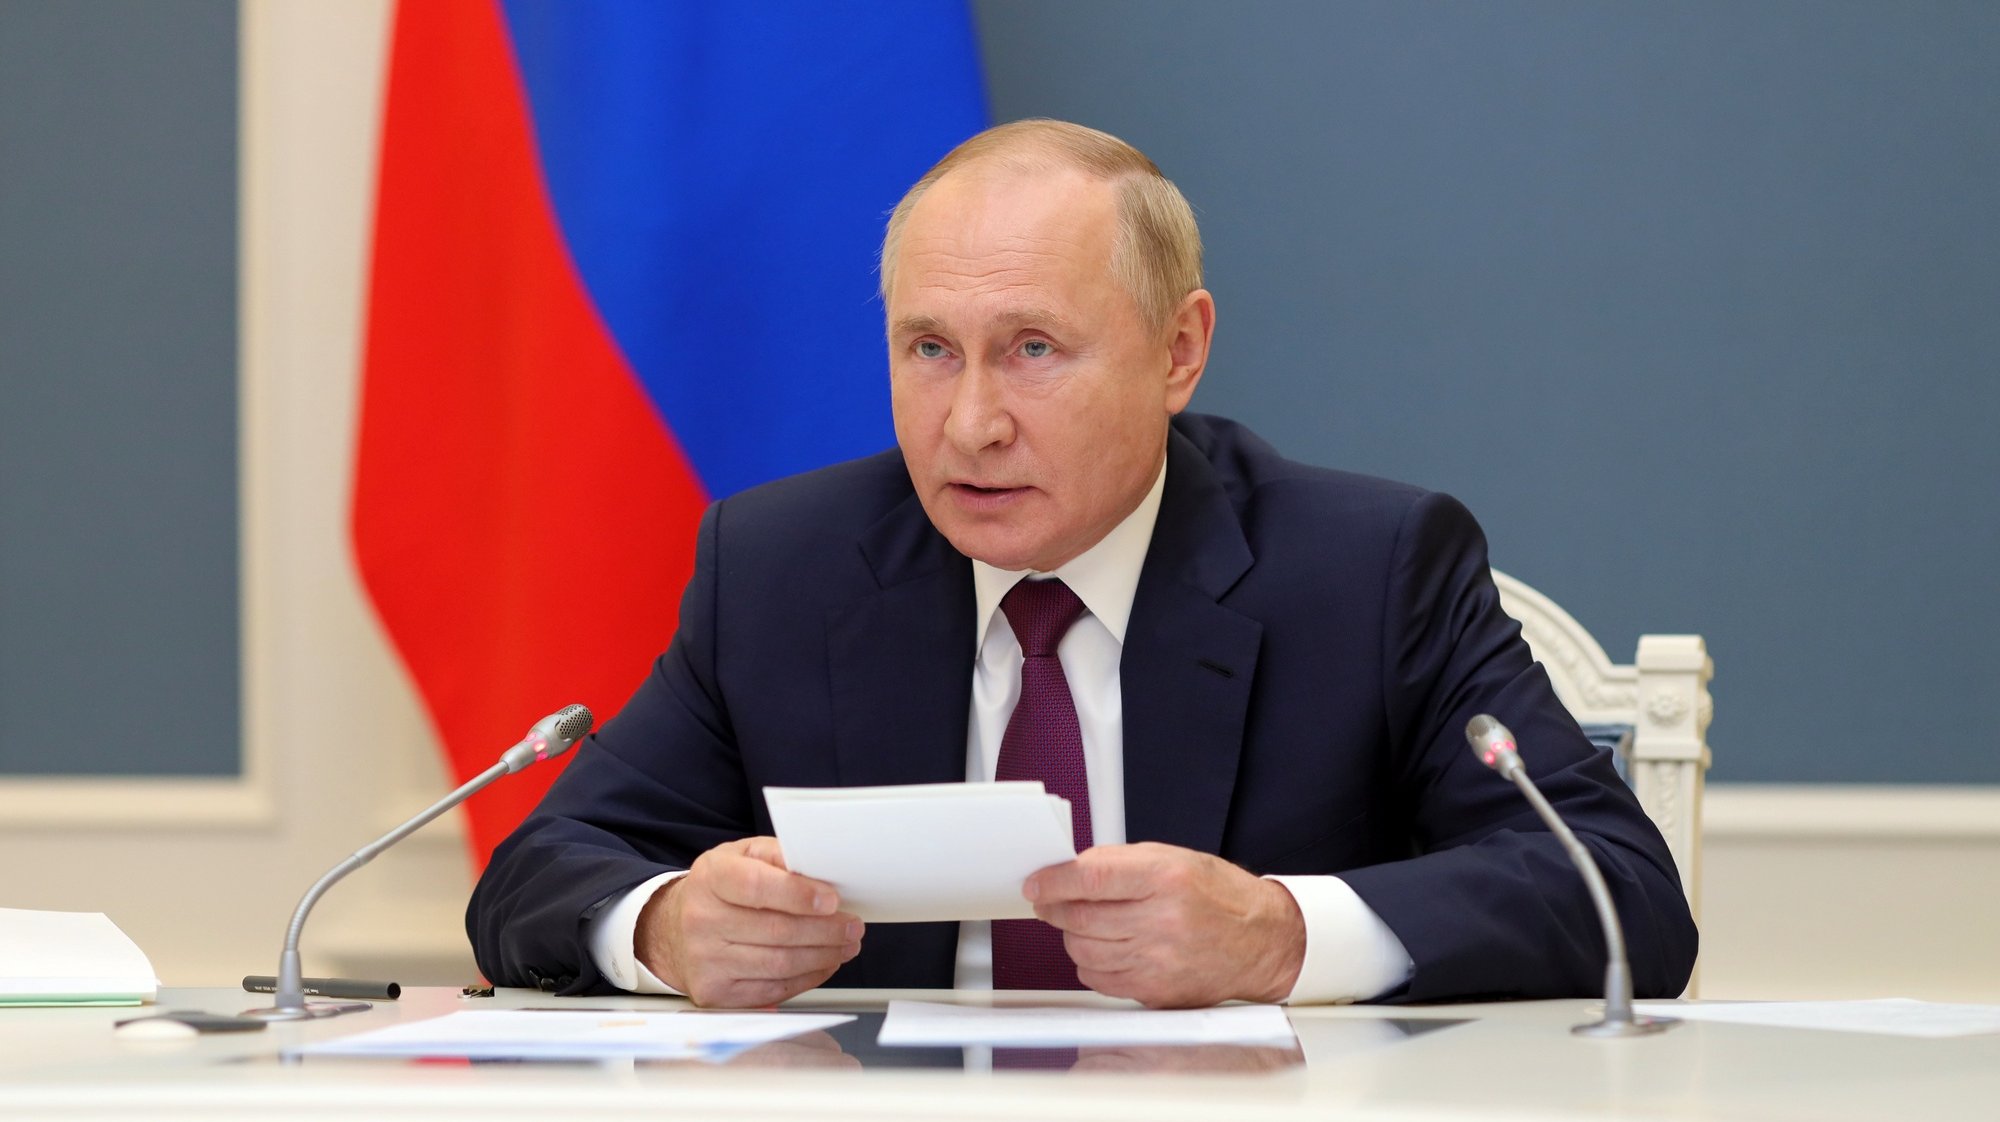 epa09554144 Russian President Vladimir Putin during a session of the G20 summit of world leaders, via teleconference in Moscow, Russia, 30 October 2021.  EPA/EVGENIY PAULIN / SPUTNIK / KREMLIN POOL MANDATORY CREDIT